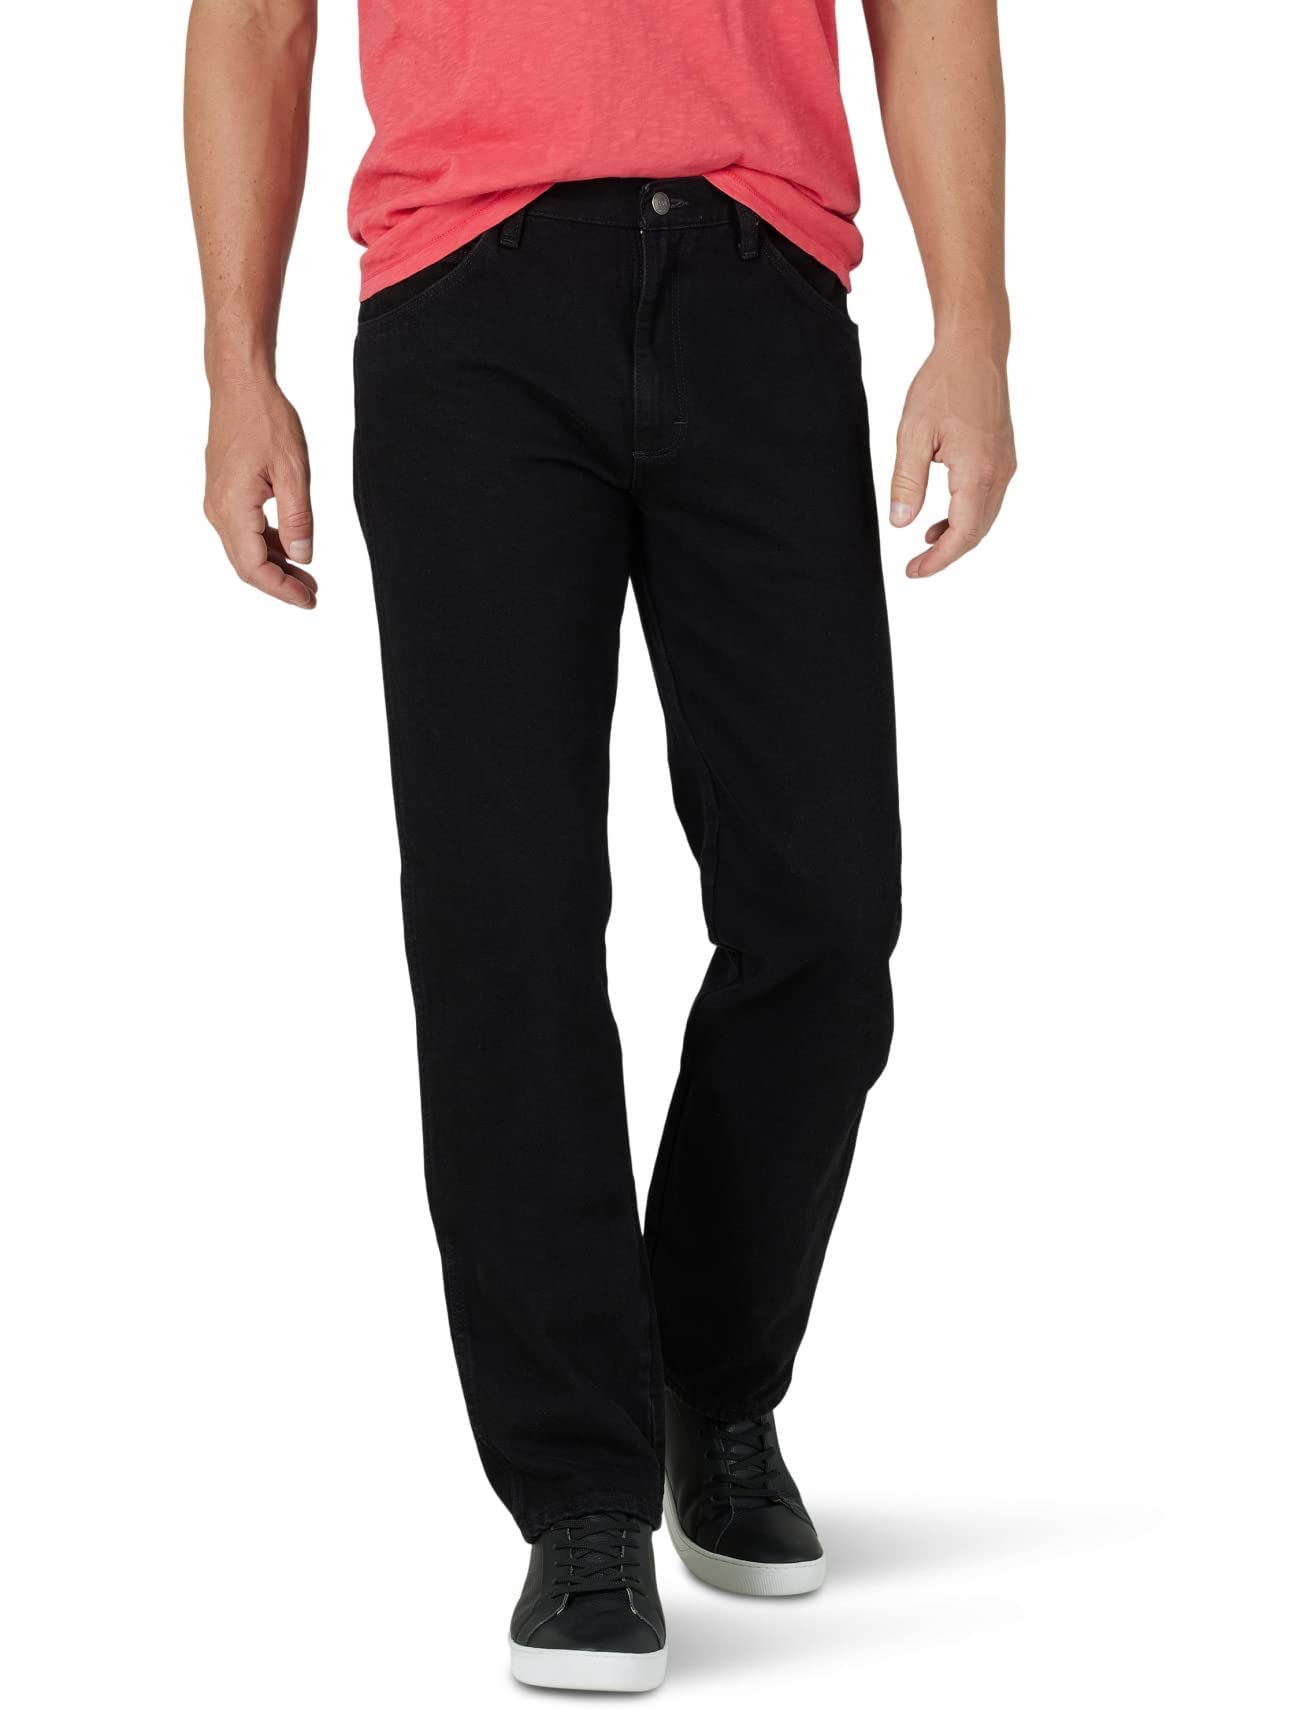 Wrangler Authentics Men's Classic 5-Pocket Regular Fit Cotton Jean, Black, 37W x 30L